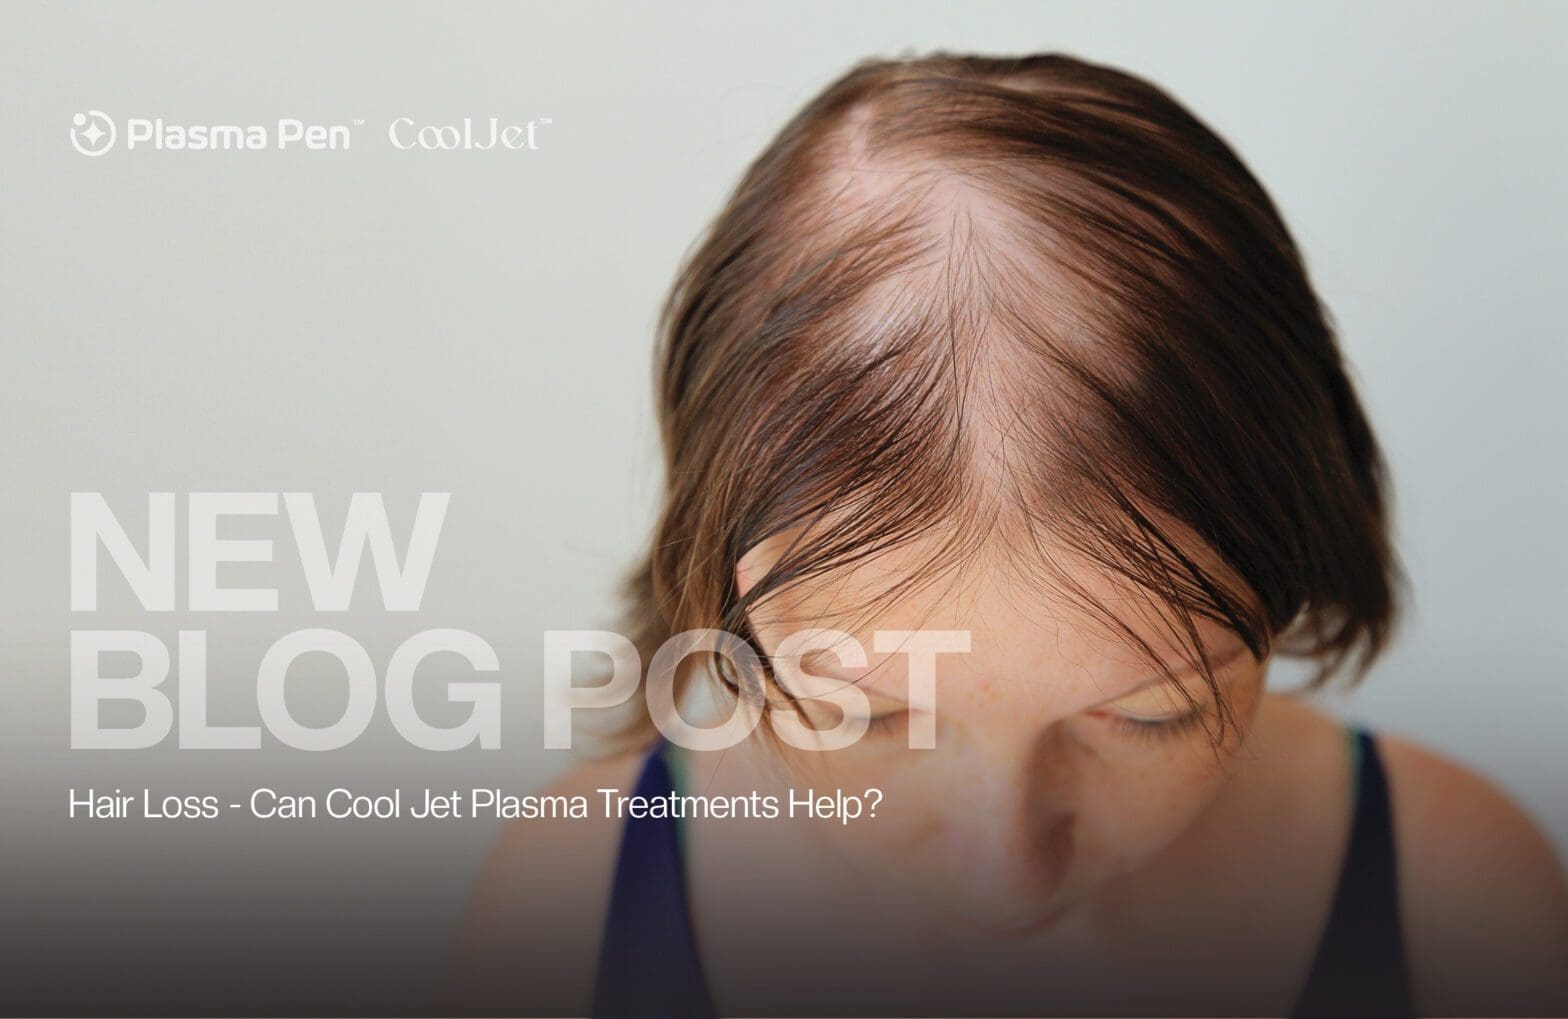 Hair Loss - Can Cool Jet Plasma Treatments Help?